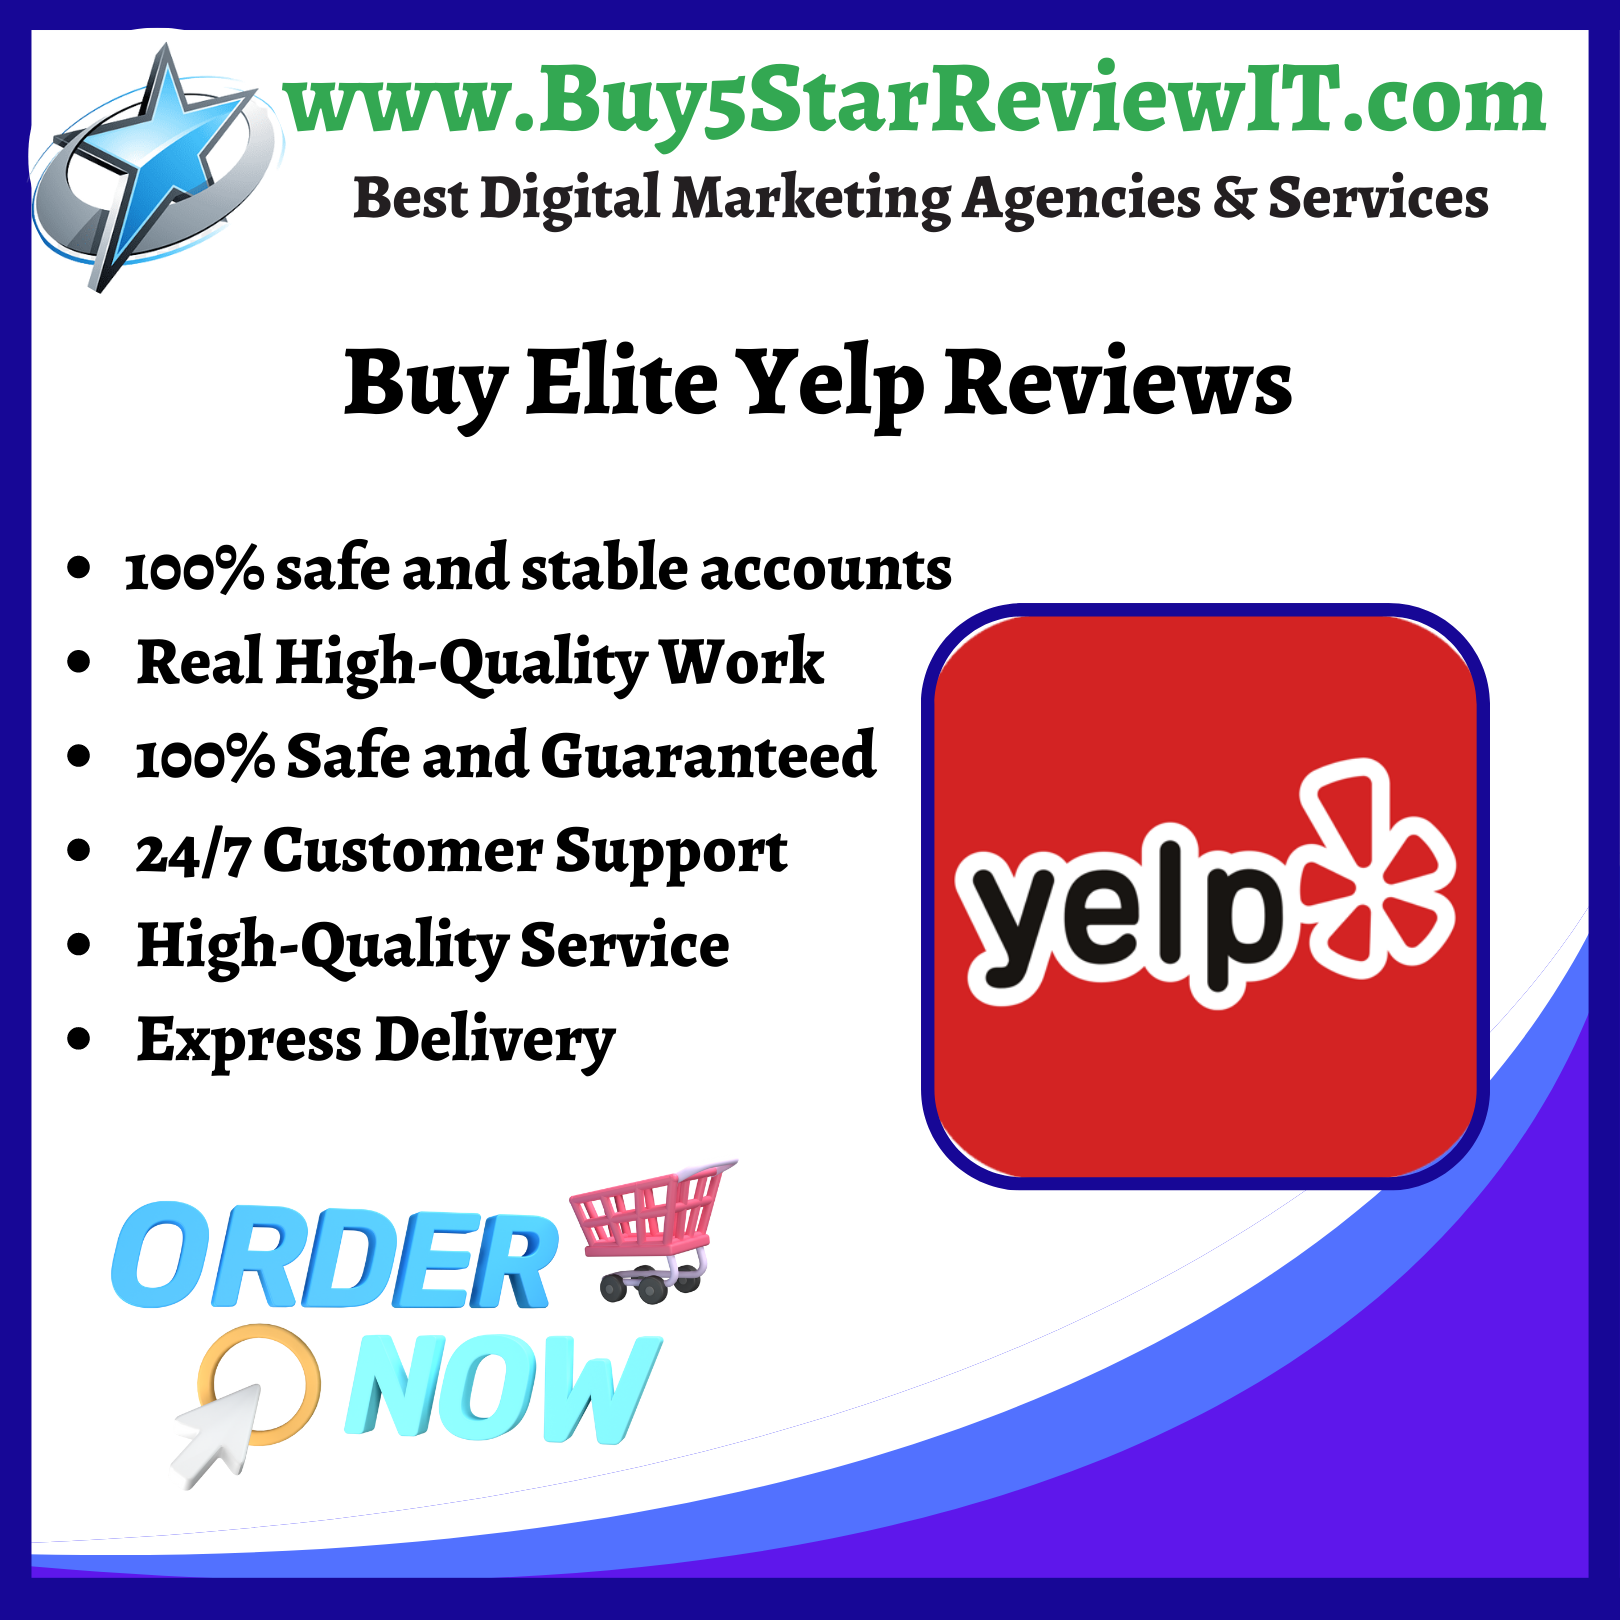 Buy Elite Yelp Reviews - Buy 5 Star Review IT